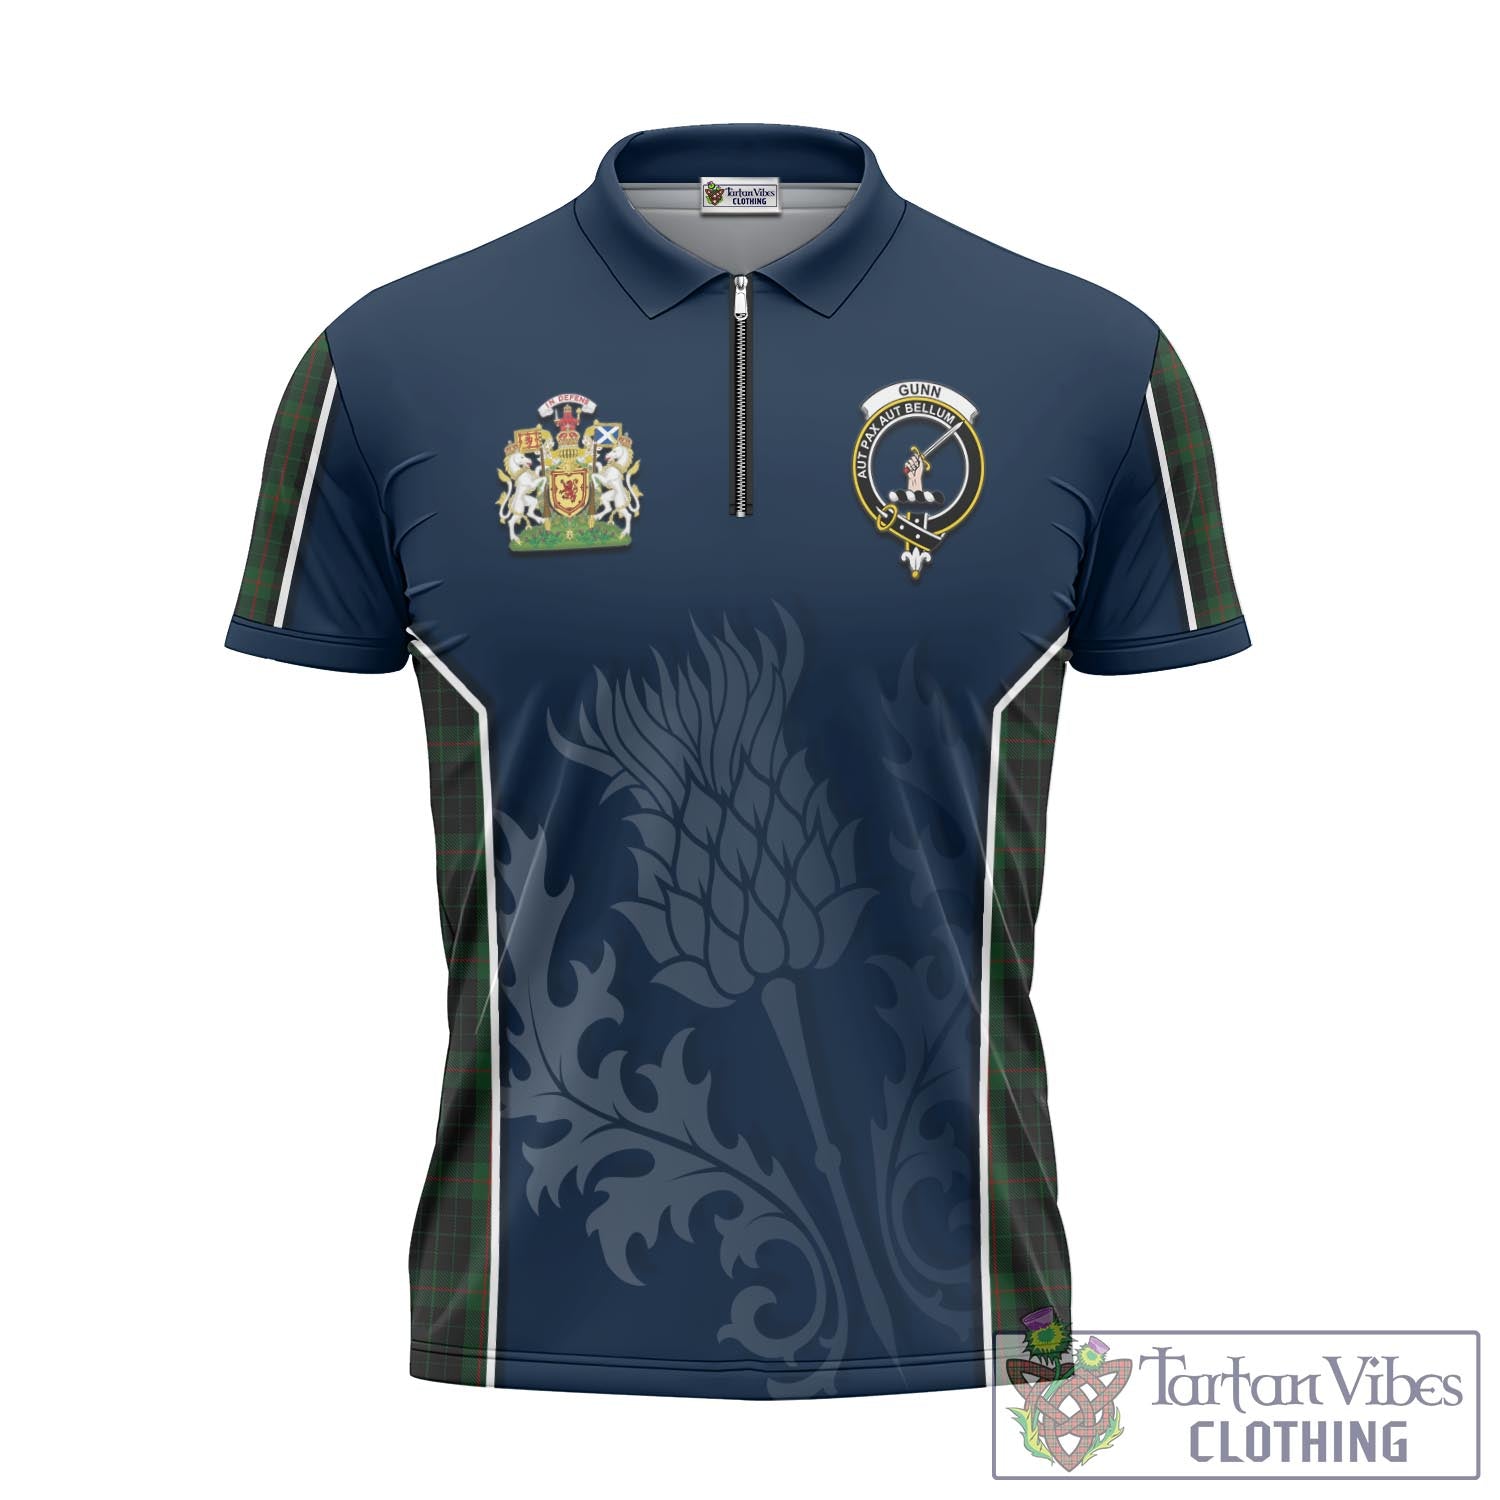 Tartan Vibes Clothing Gunn Logan Tartan Zipper Polo Shirt with Family Crest and Scottish Thistle Vibes Sport Style